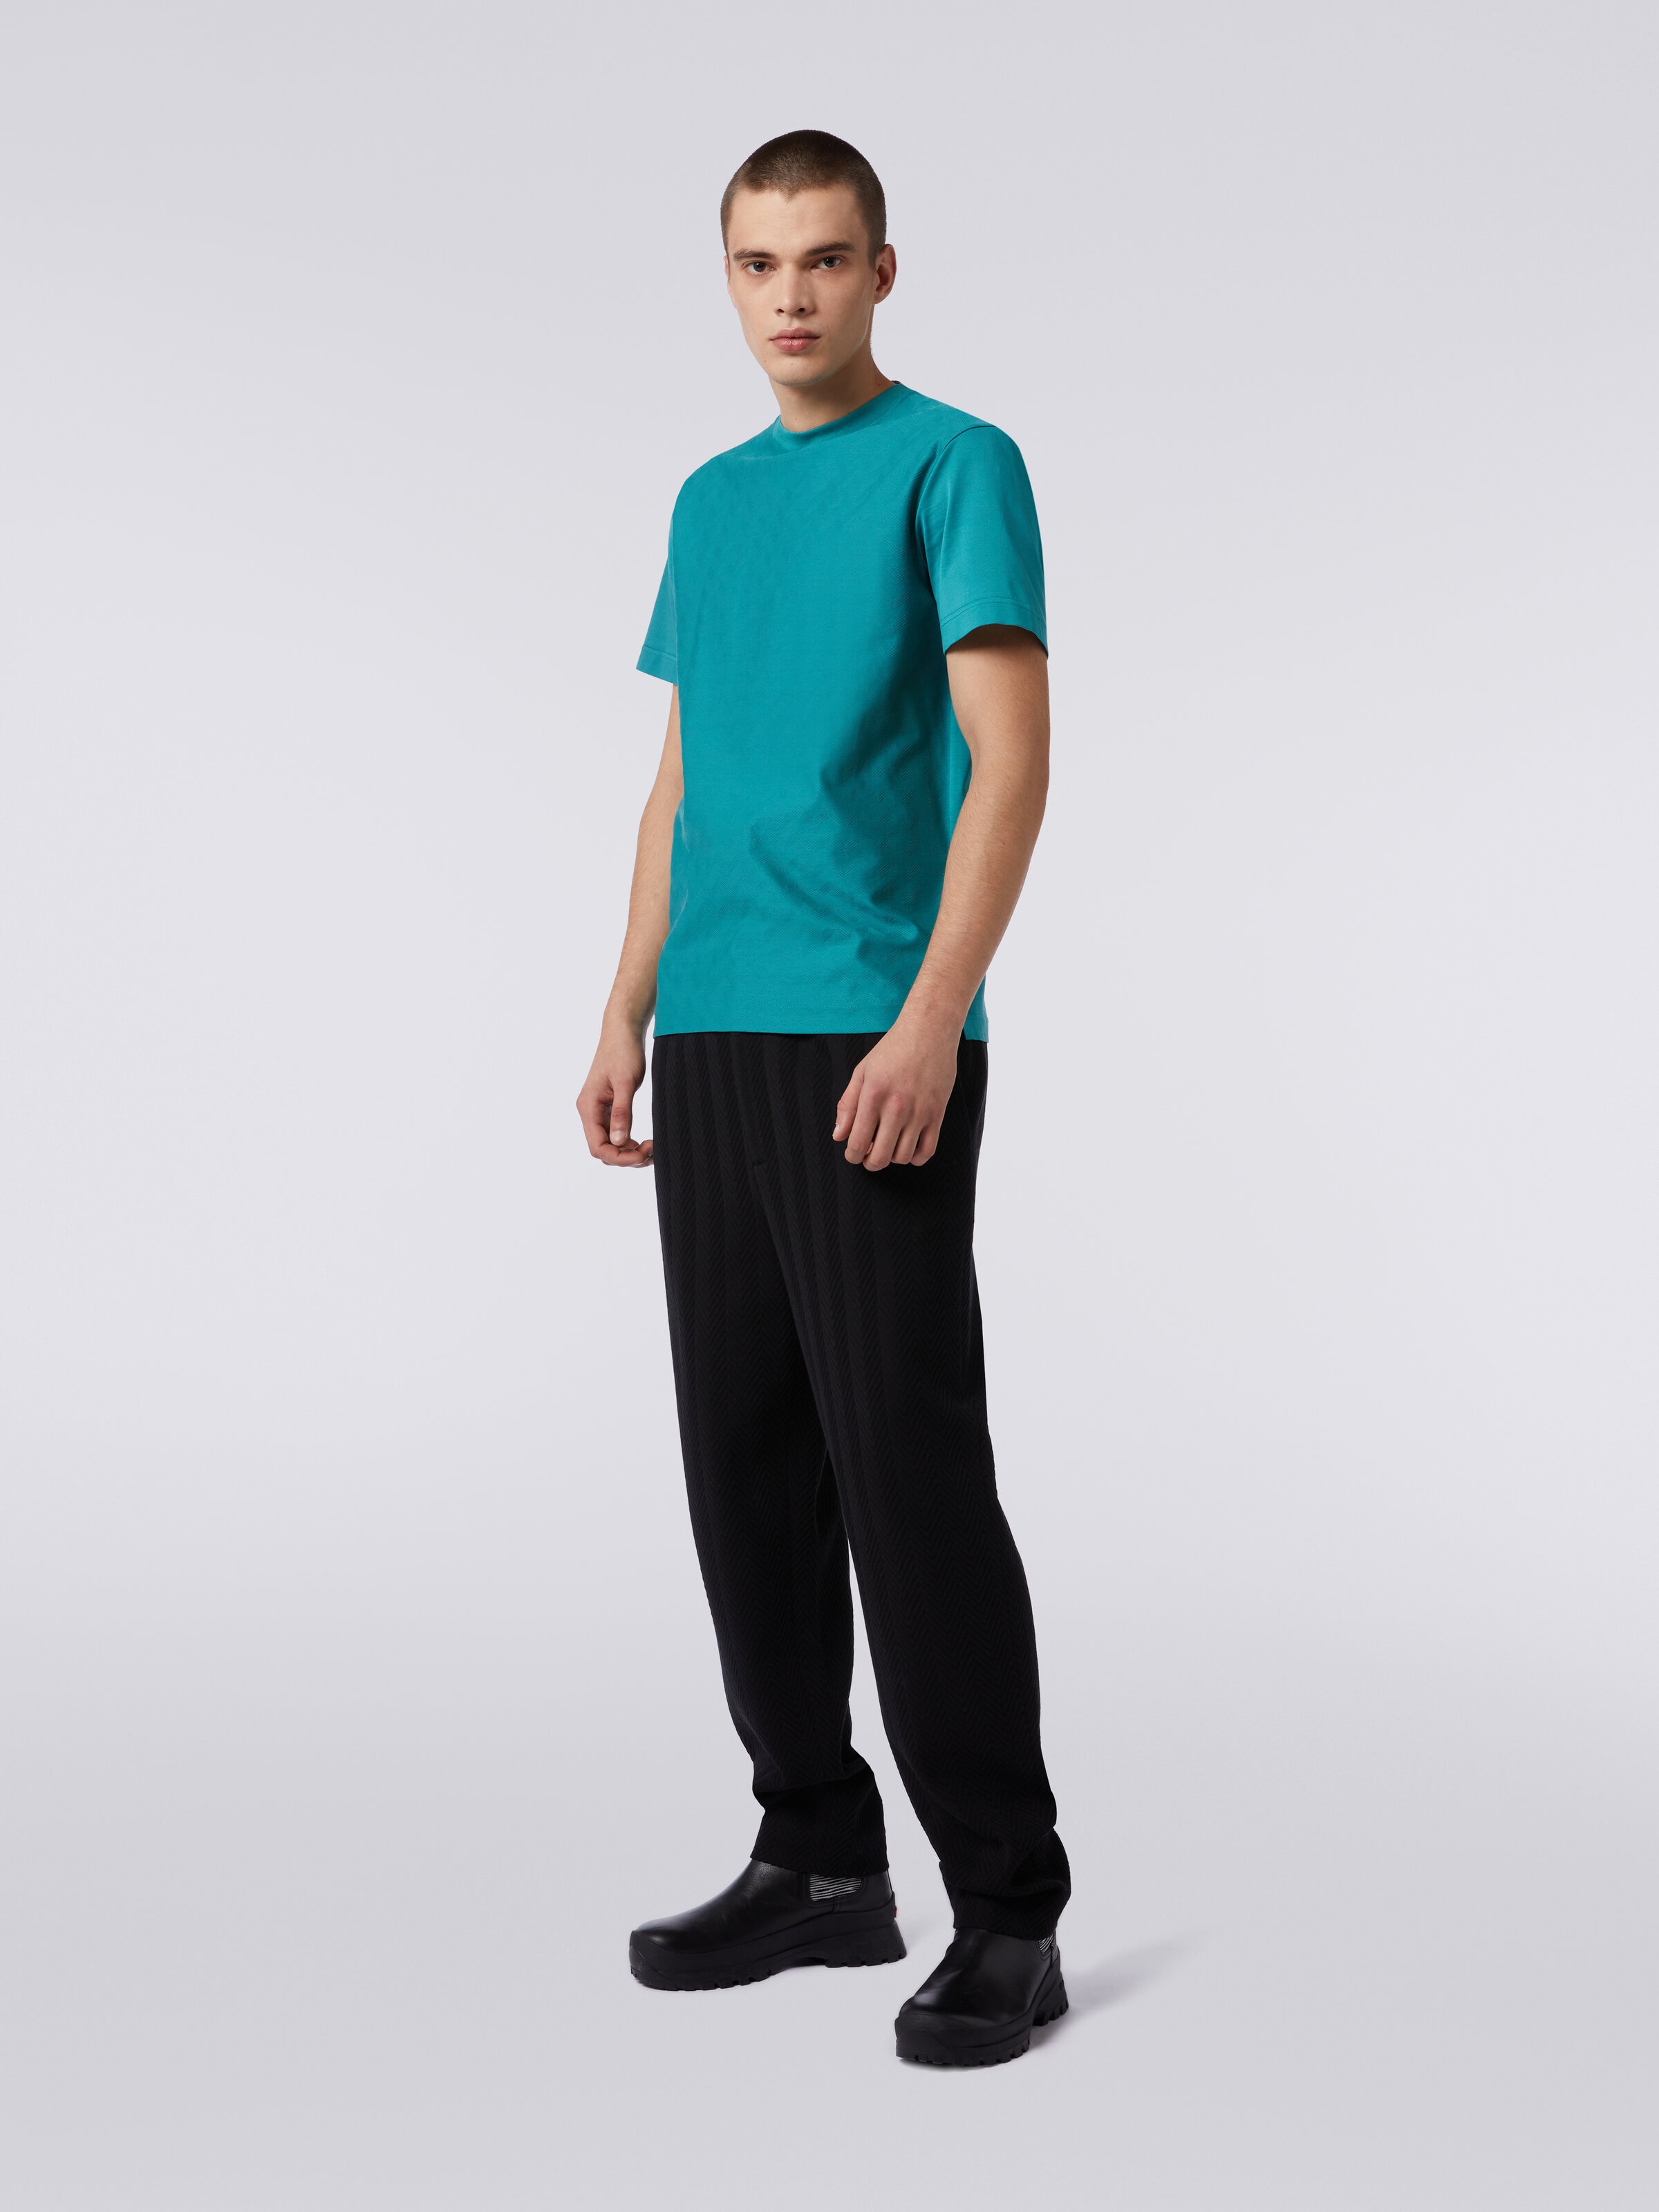 Kurzärmeliges Baumwoll-T-Shirt mit Zickzackmuster, Grün  - 2